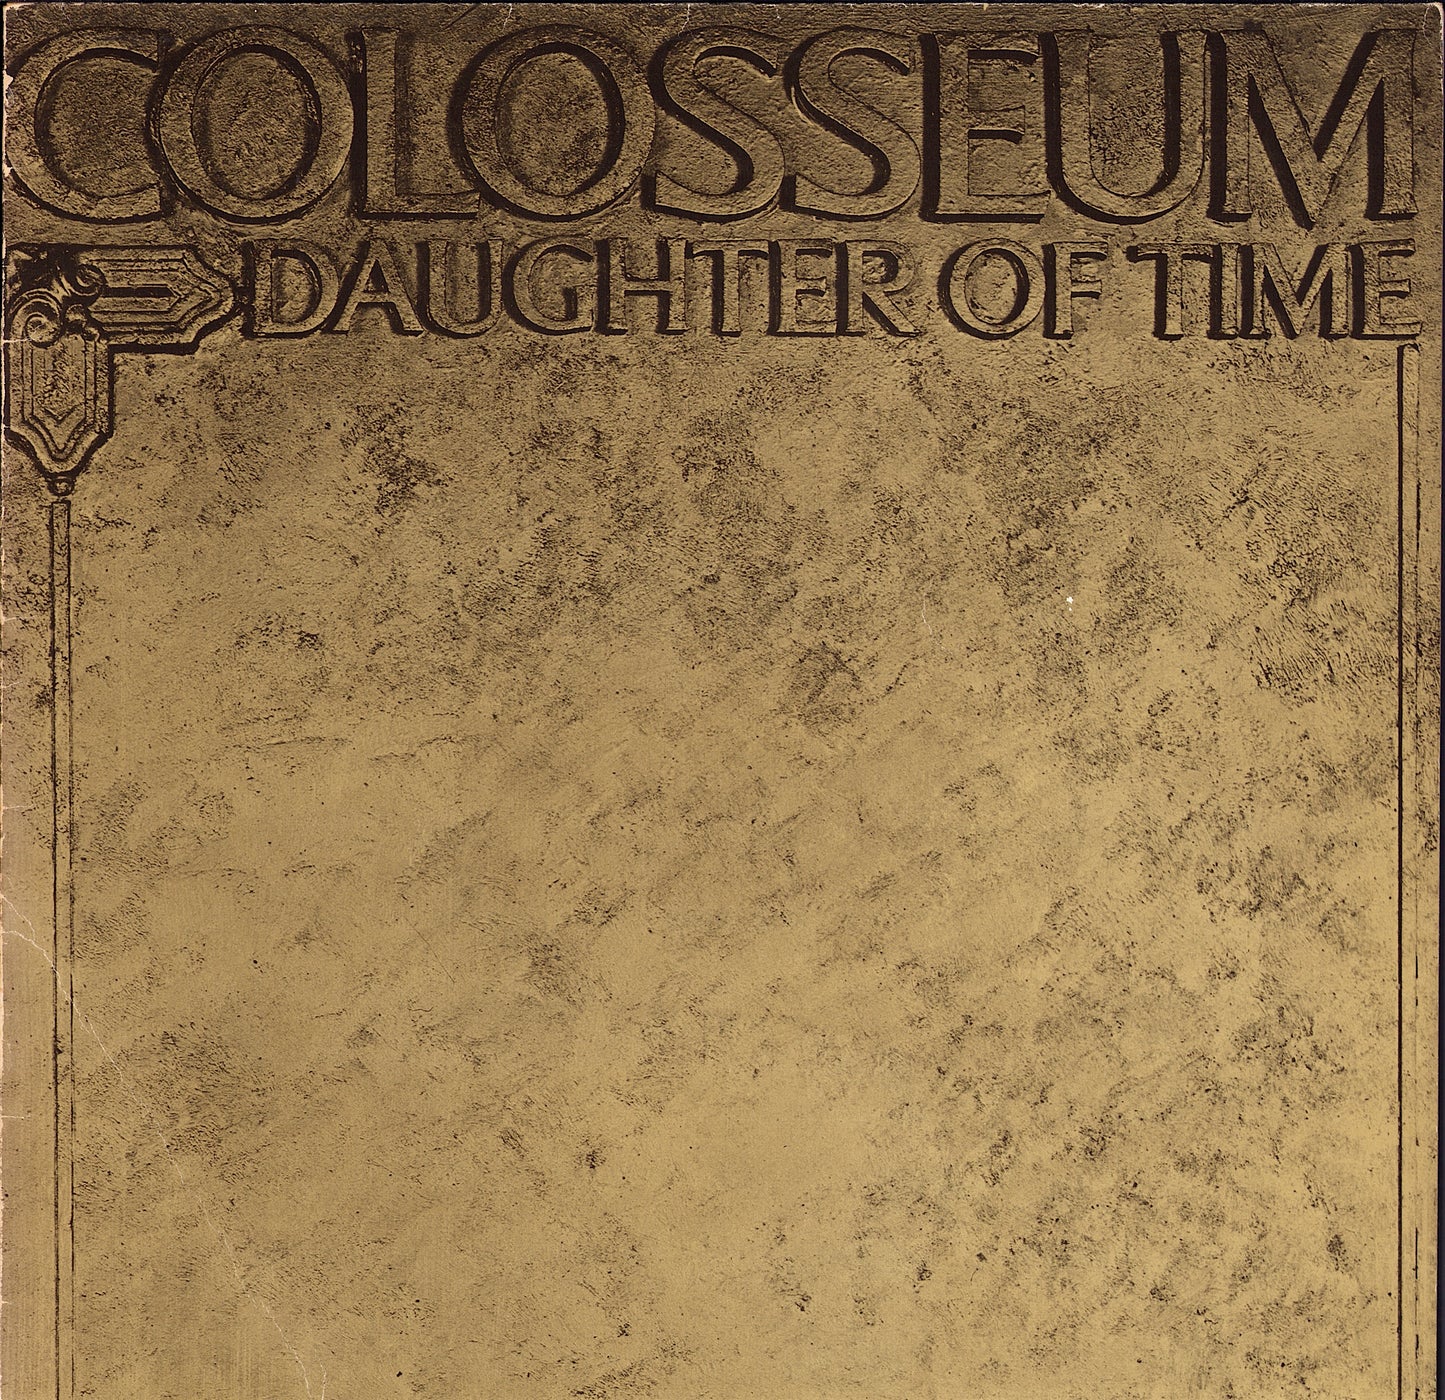 Colosseum - Daughter Of Time Vinyl LP NE